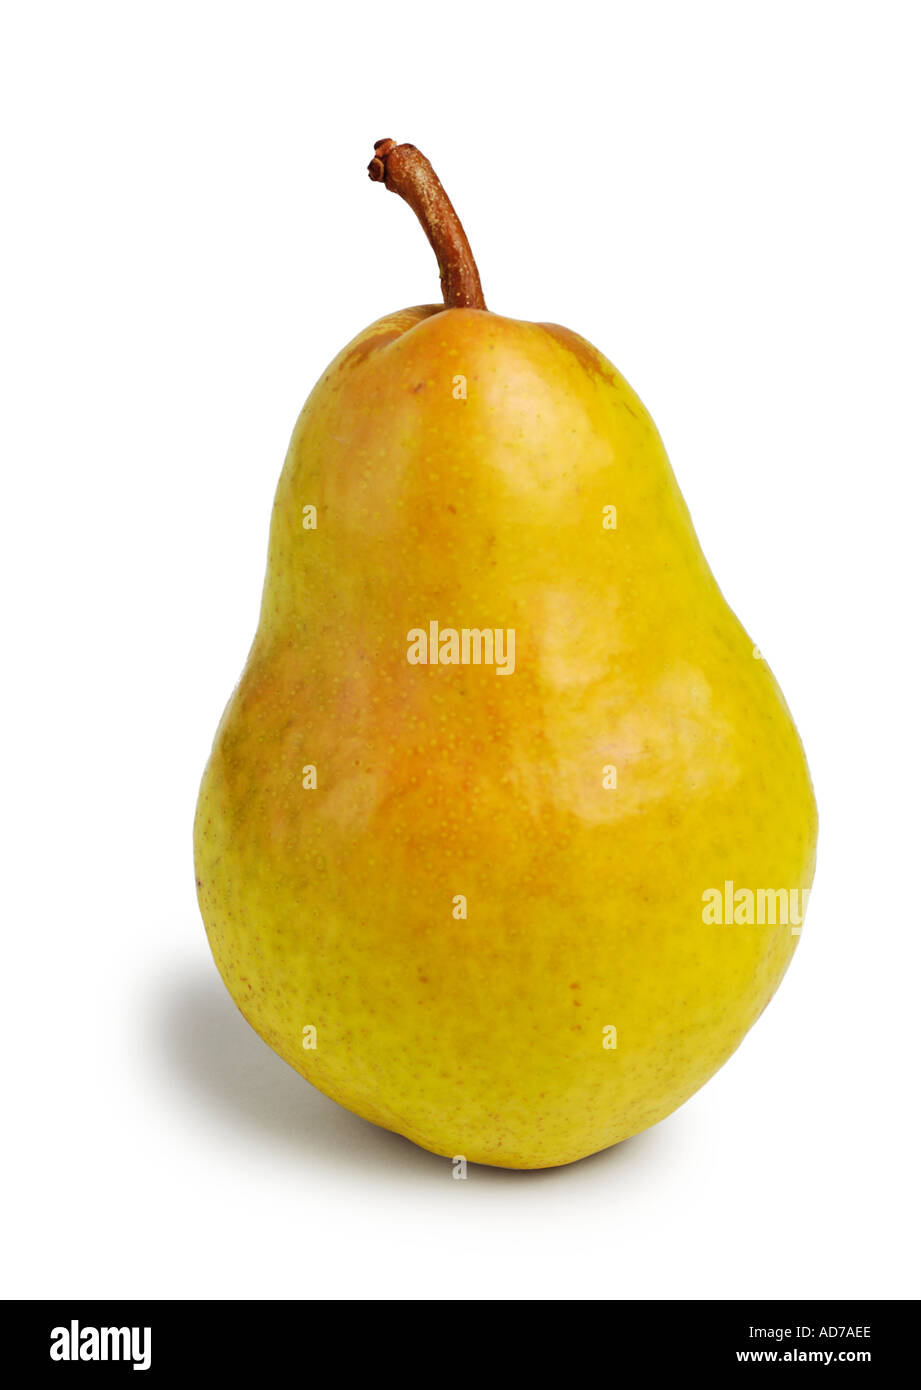 Yellow Bartlett Pear Stock Photo